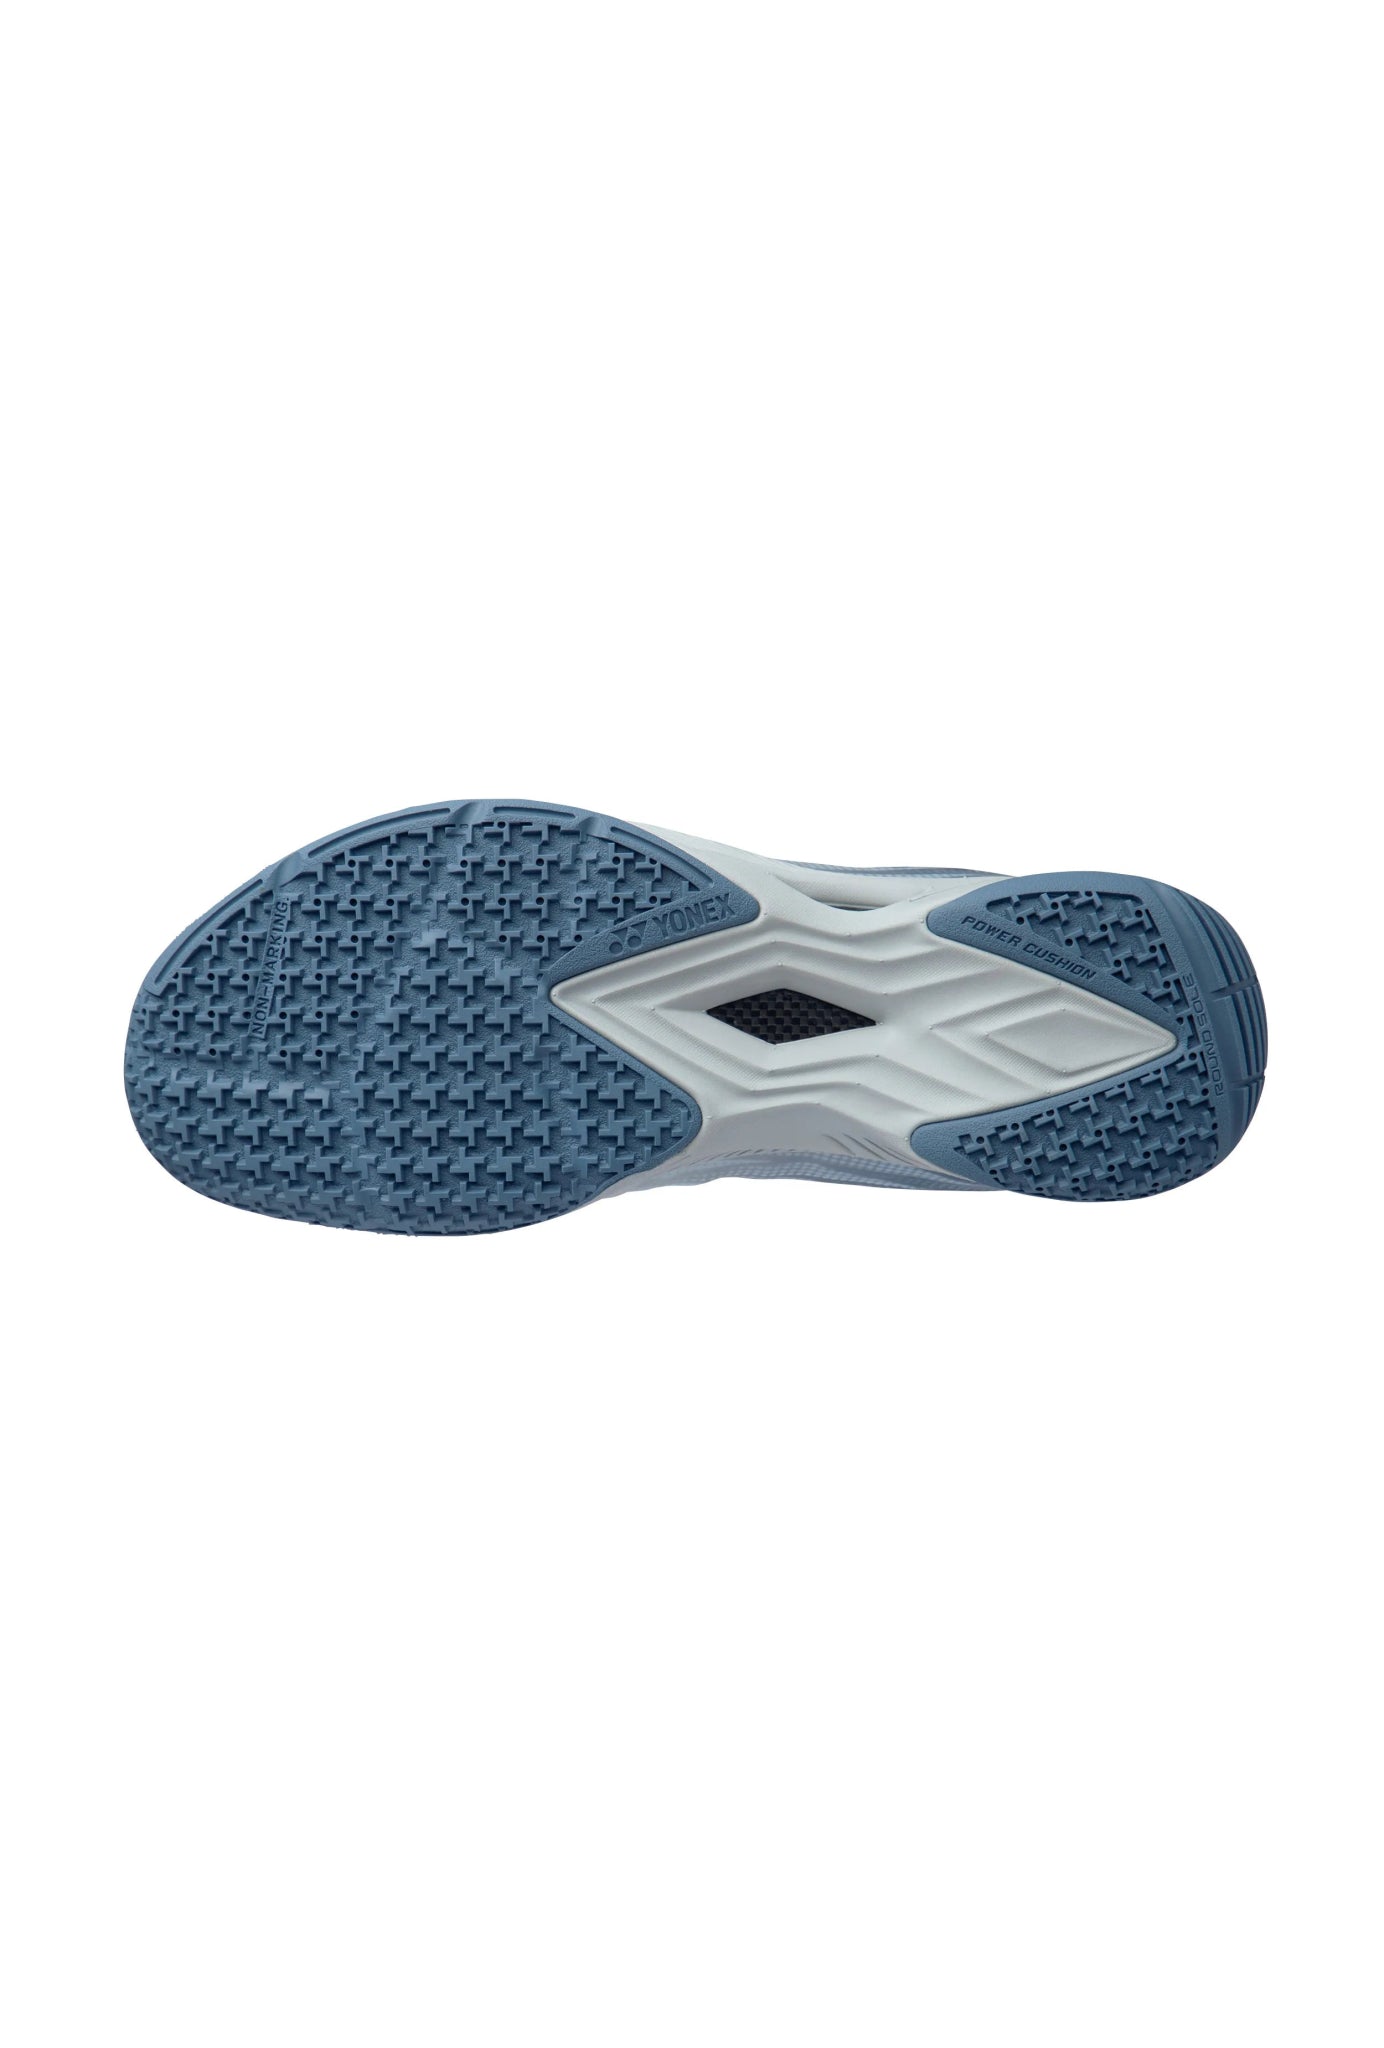 Yonex Badminton Shoe Power Cushion Aerus Z2 Men (Blue Gray) - Nexus Badminton